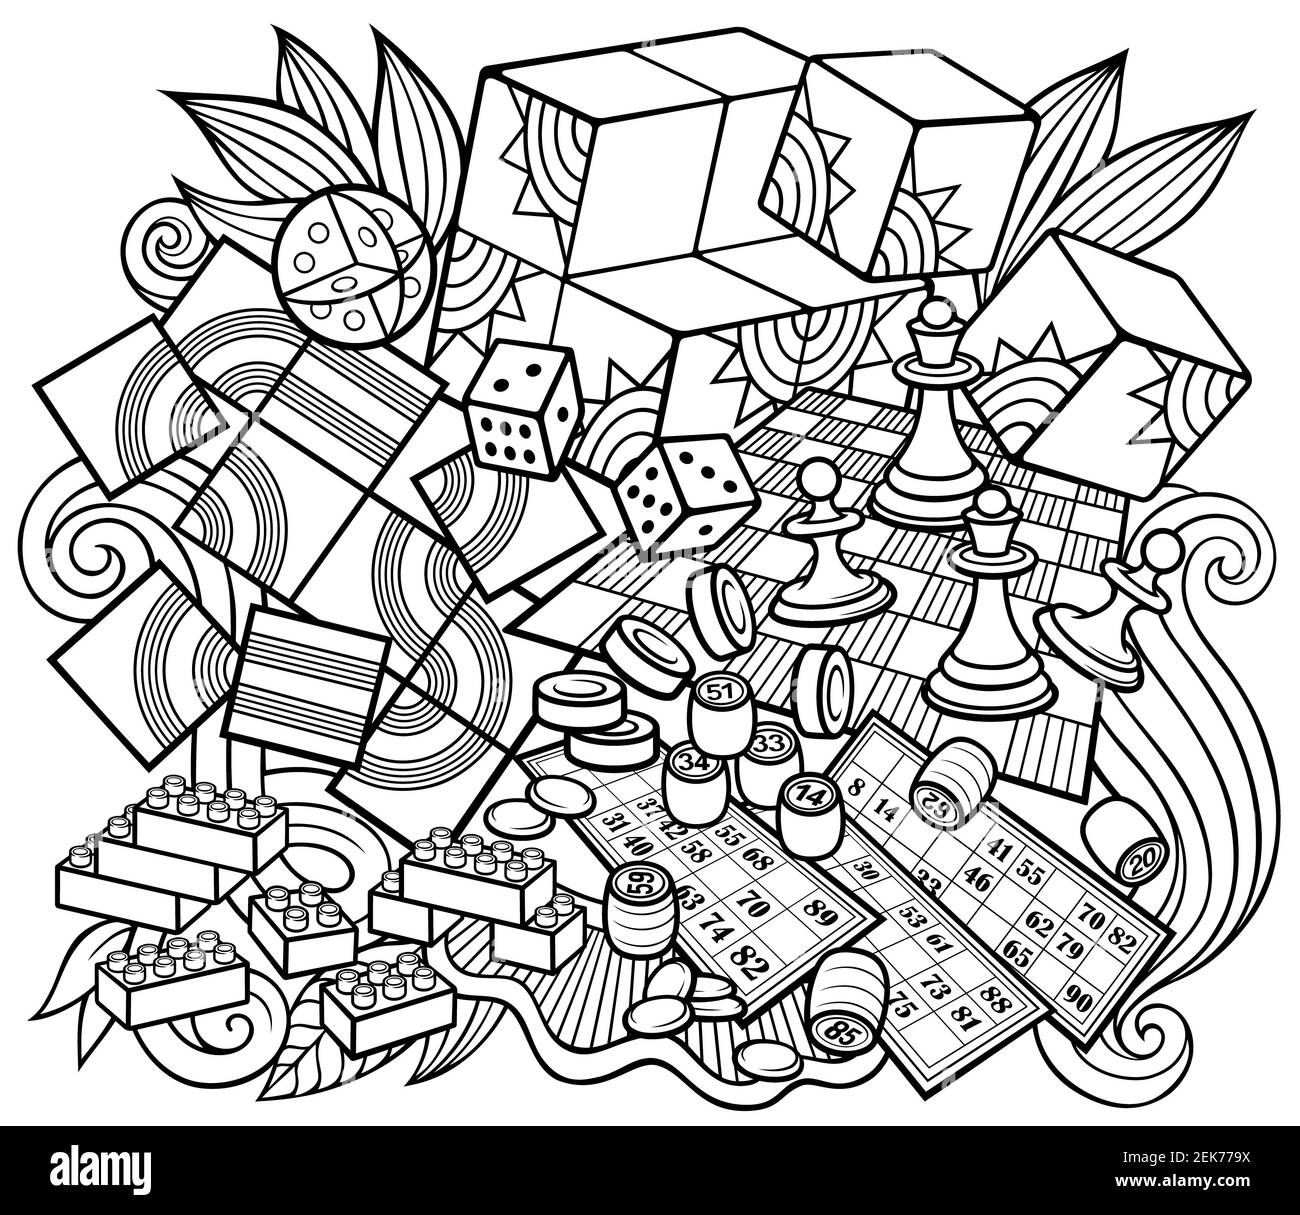 Cartoon doodles hand drawn kids toys illustration. Stock Photo